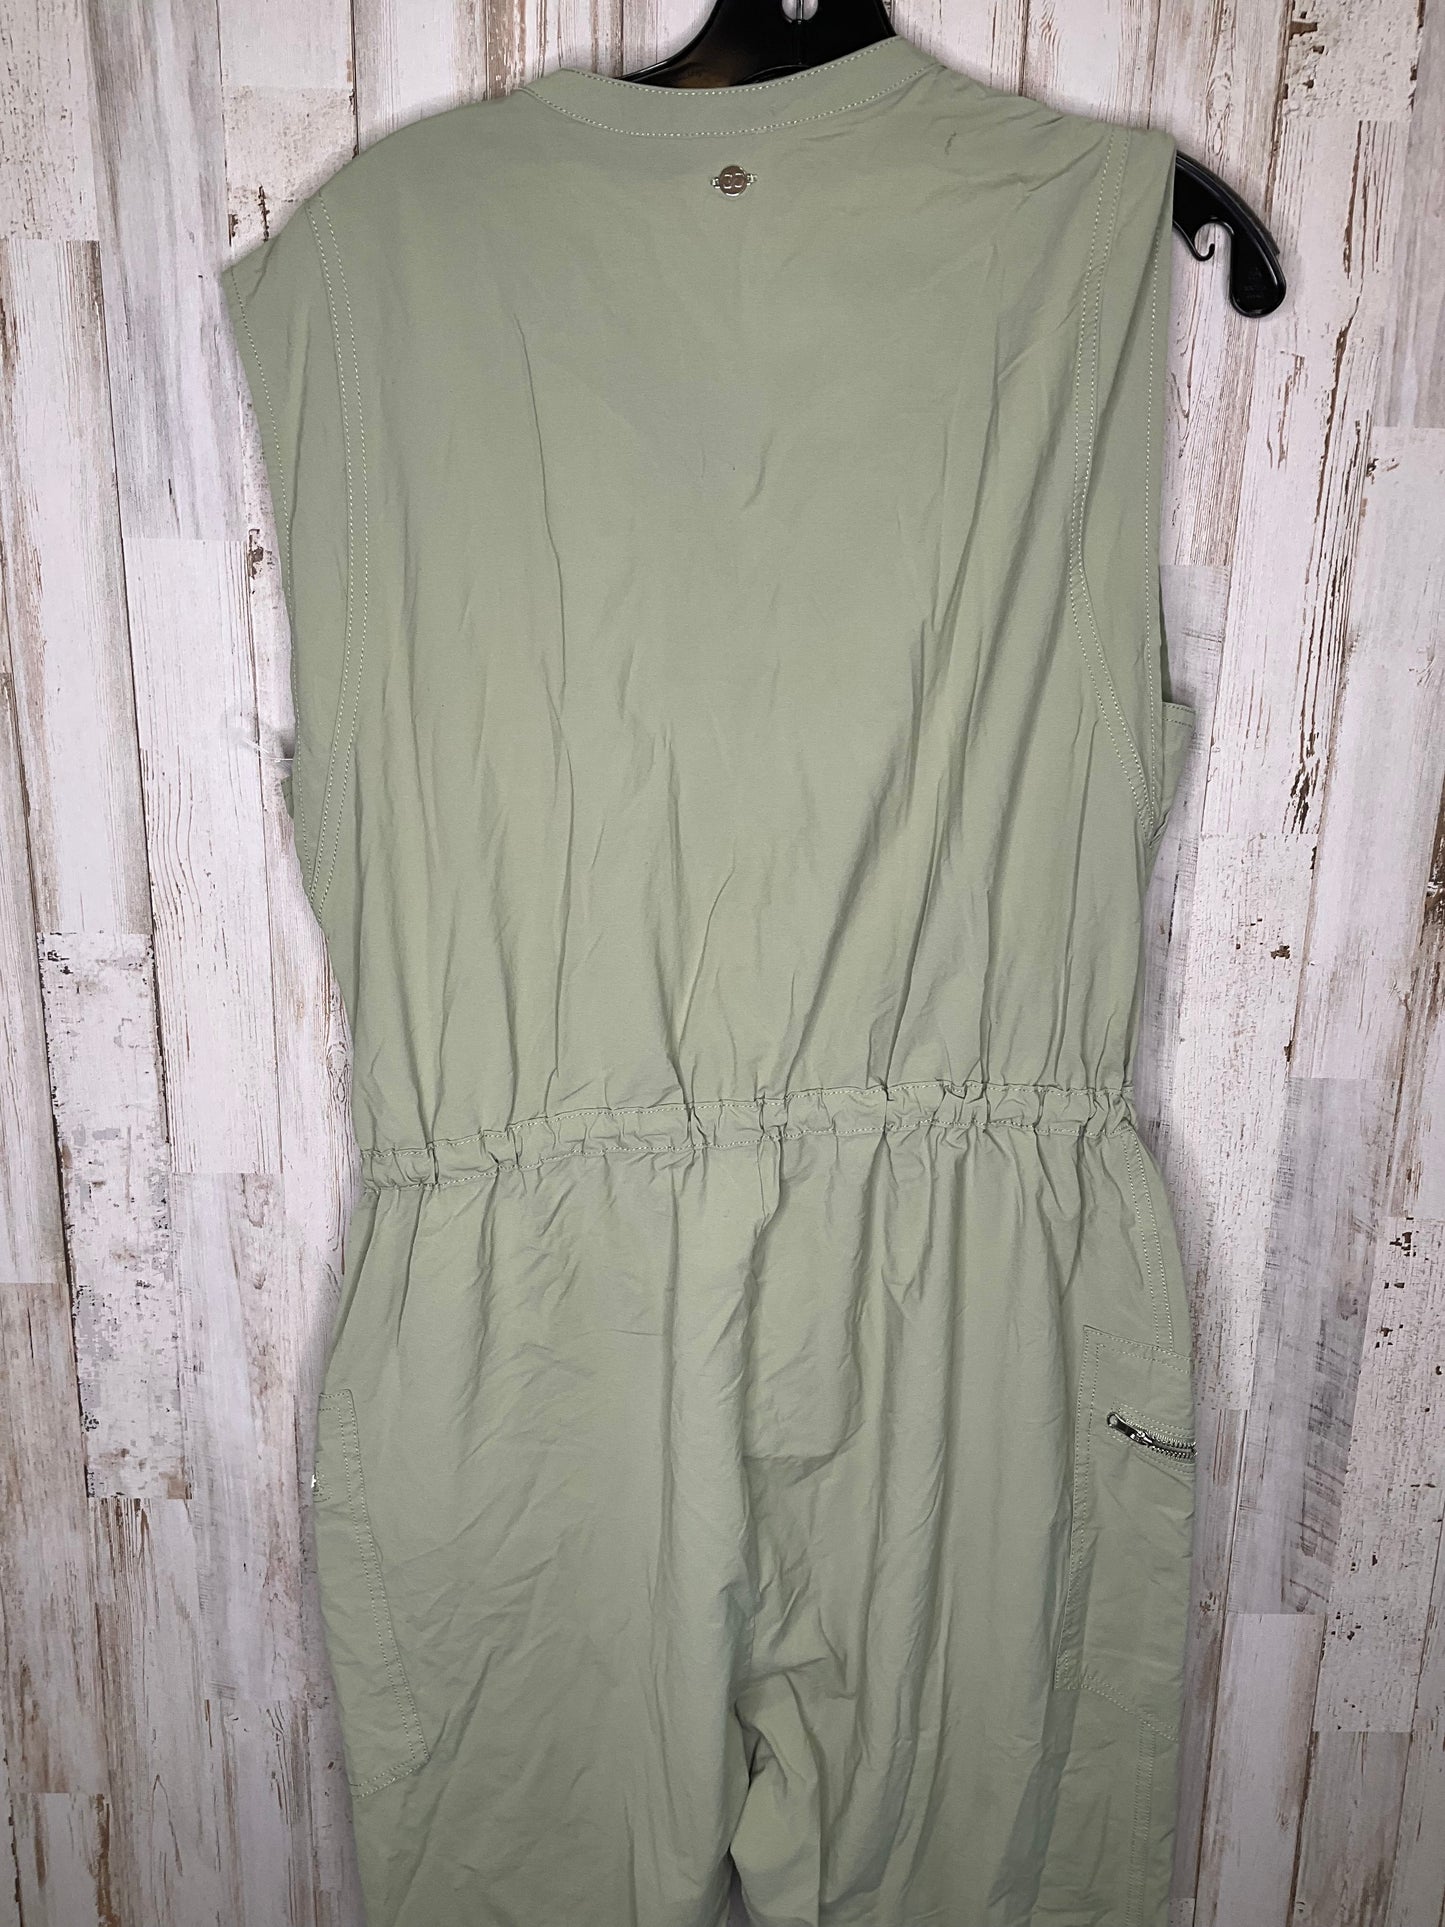 Green Jumpsuit Calia, Size L